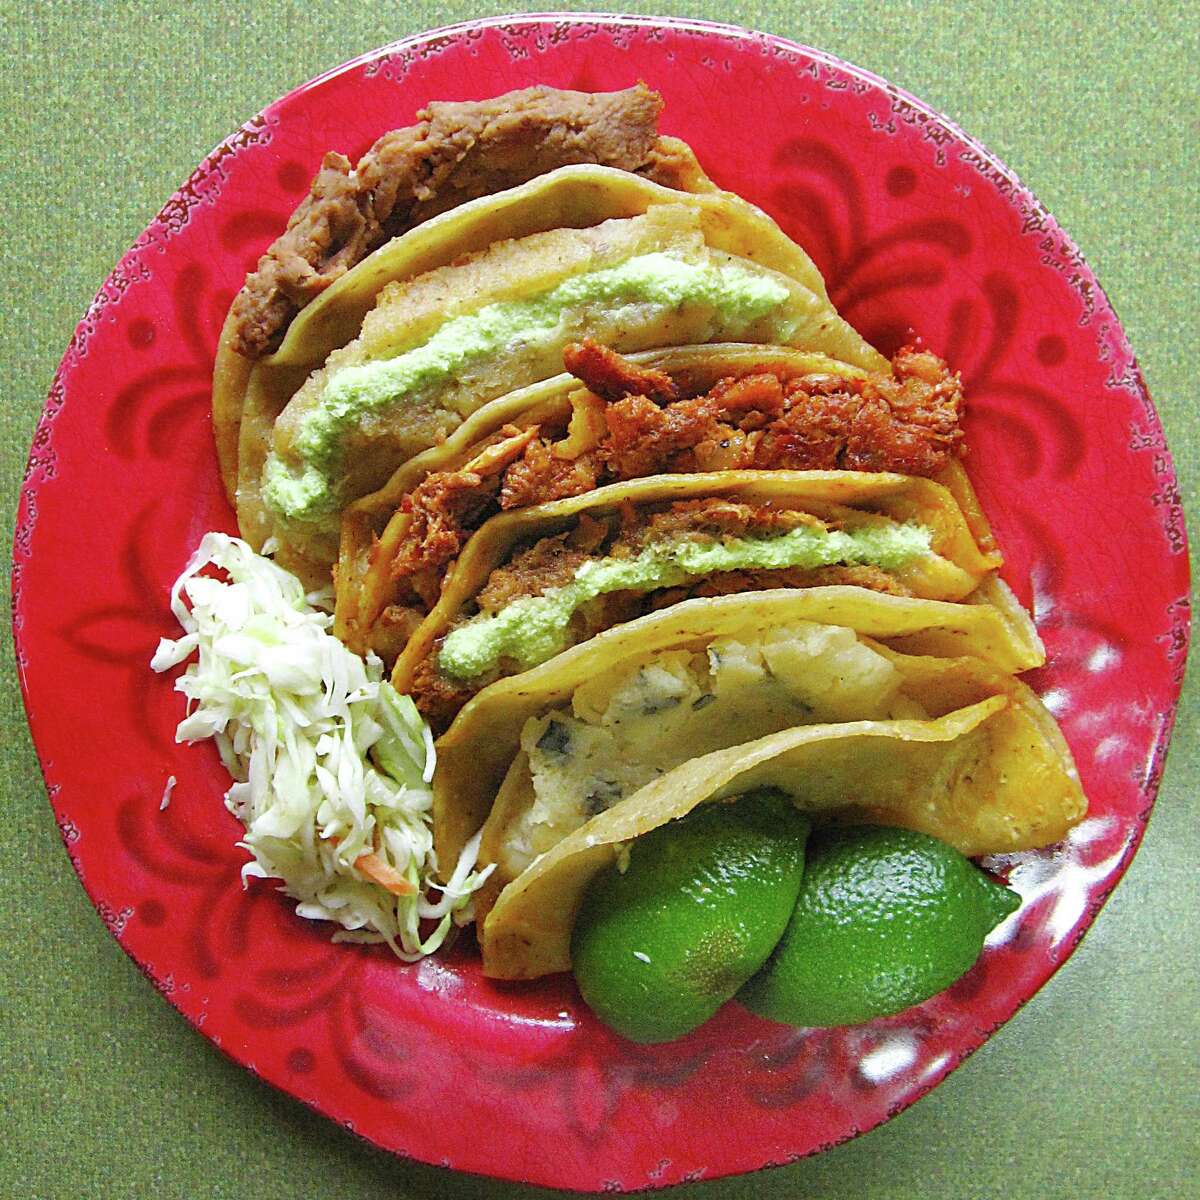 An order of five steamed tacos al vapor with cabbage escabeche from Regios Tacos Al Vapor.